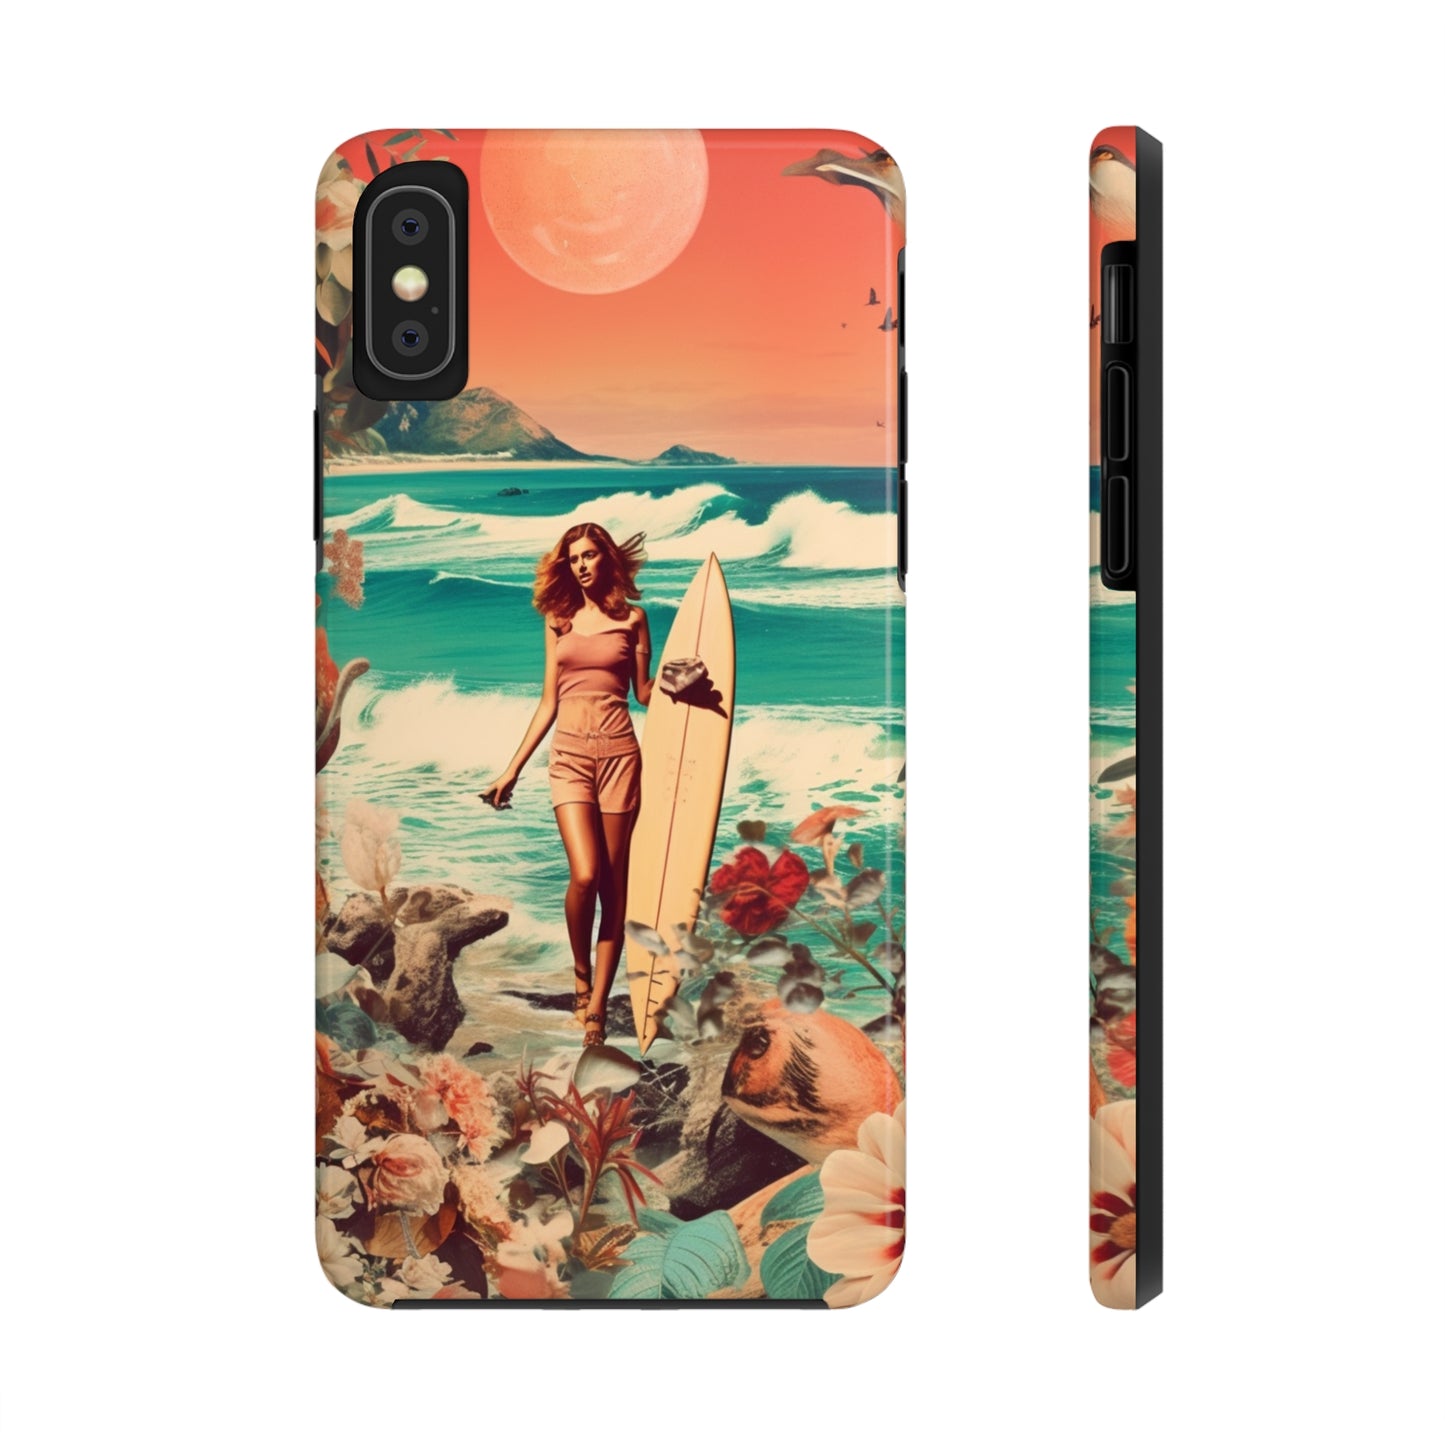 Summertime Beach Time iPhone Case